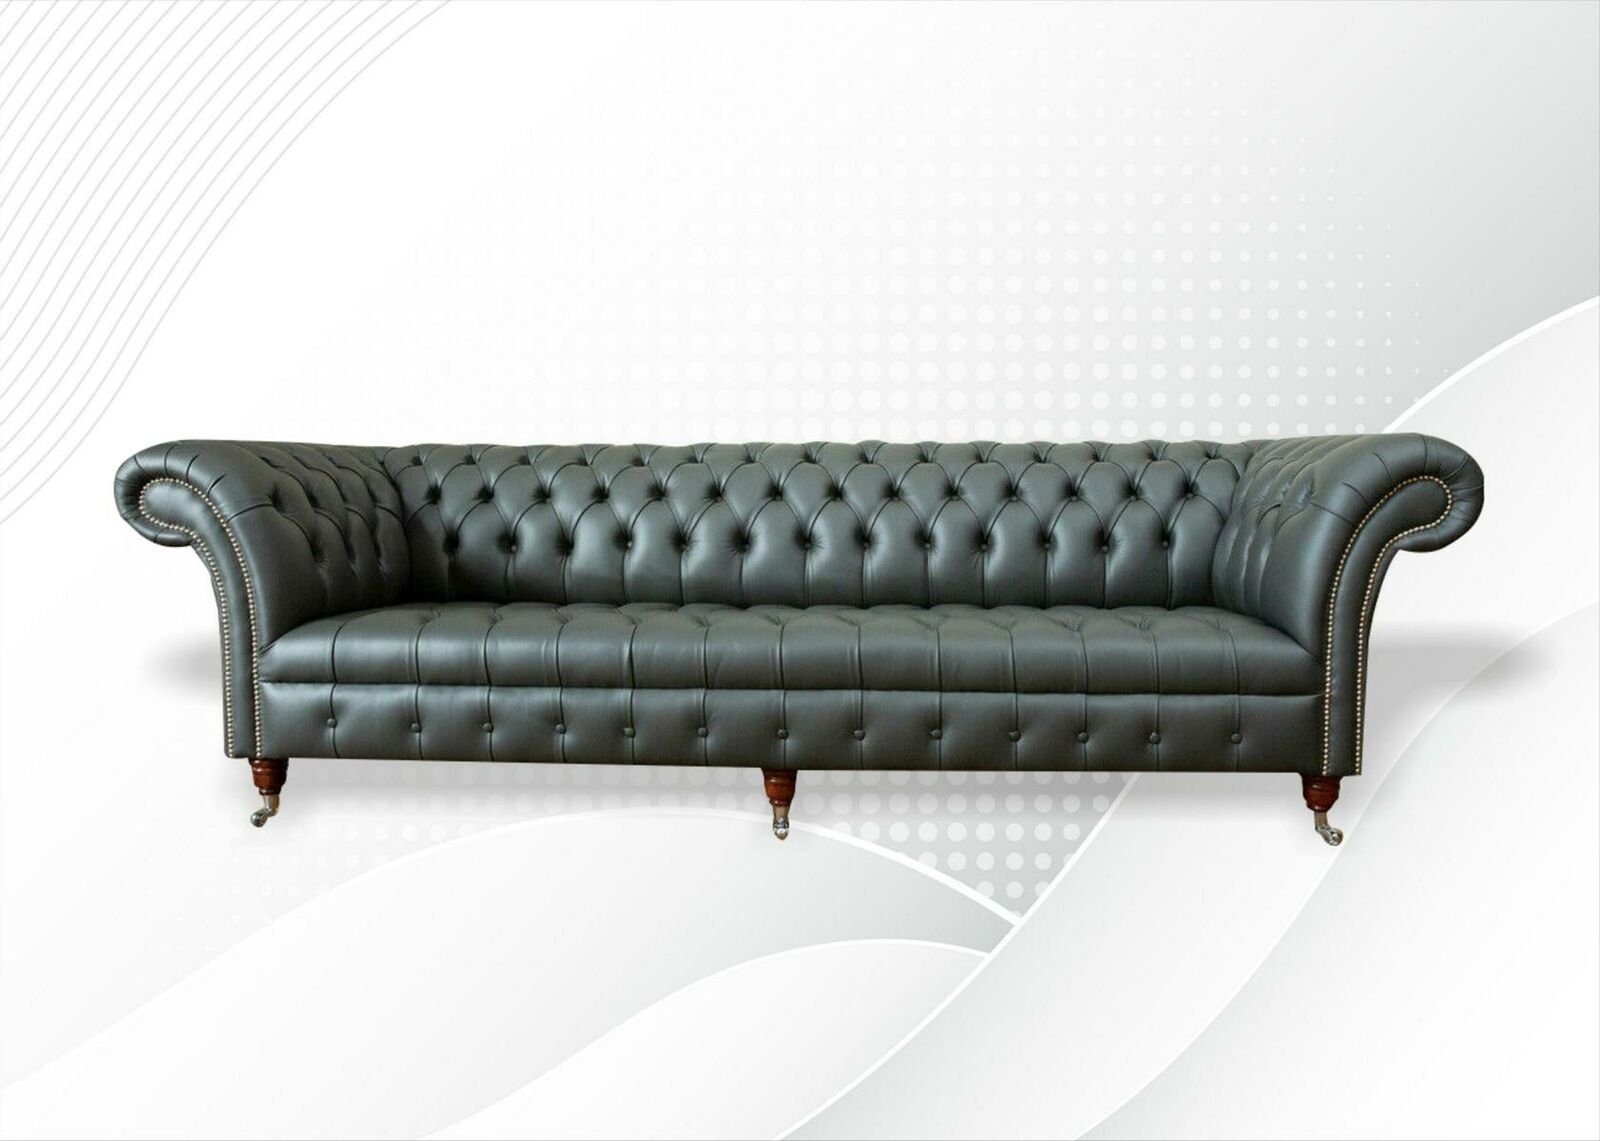 JVmoebel Chesterfield-Sofa, xxl big Chesterfield 4 Sitzer Leder Modern Design Couchen Dunkelgrau Sofa Möbel | Chesterfield-Sofas